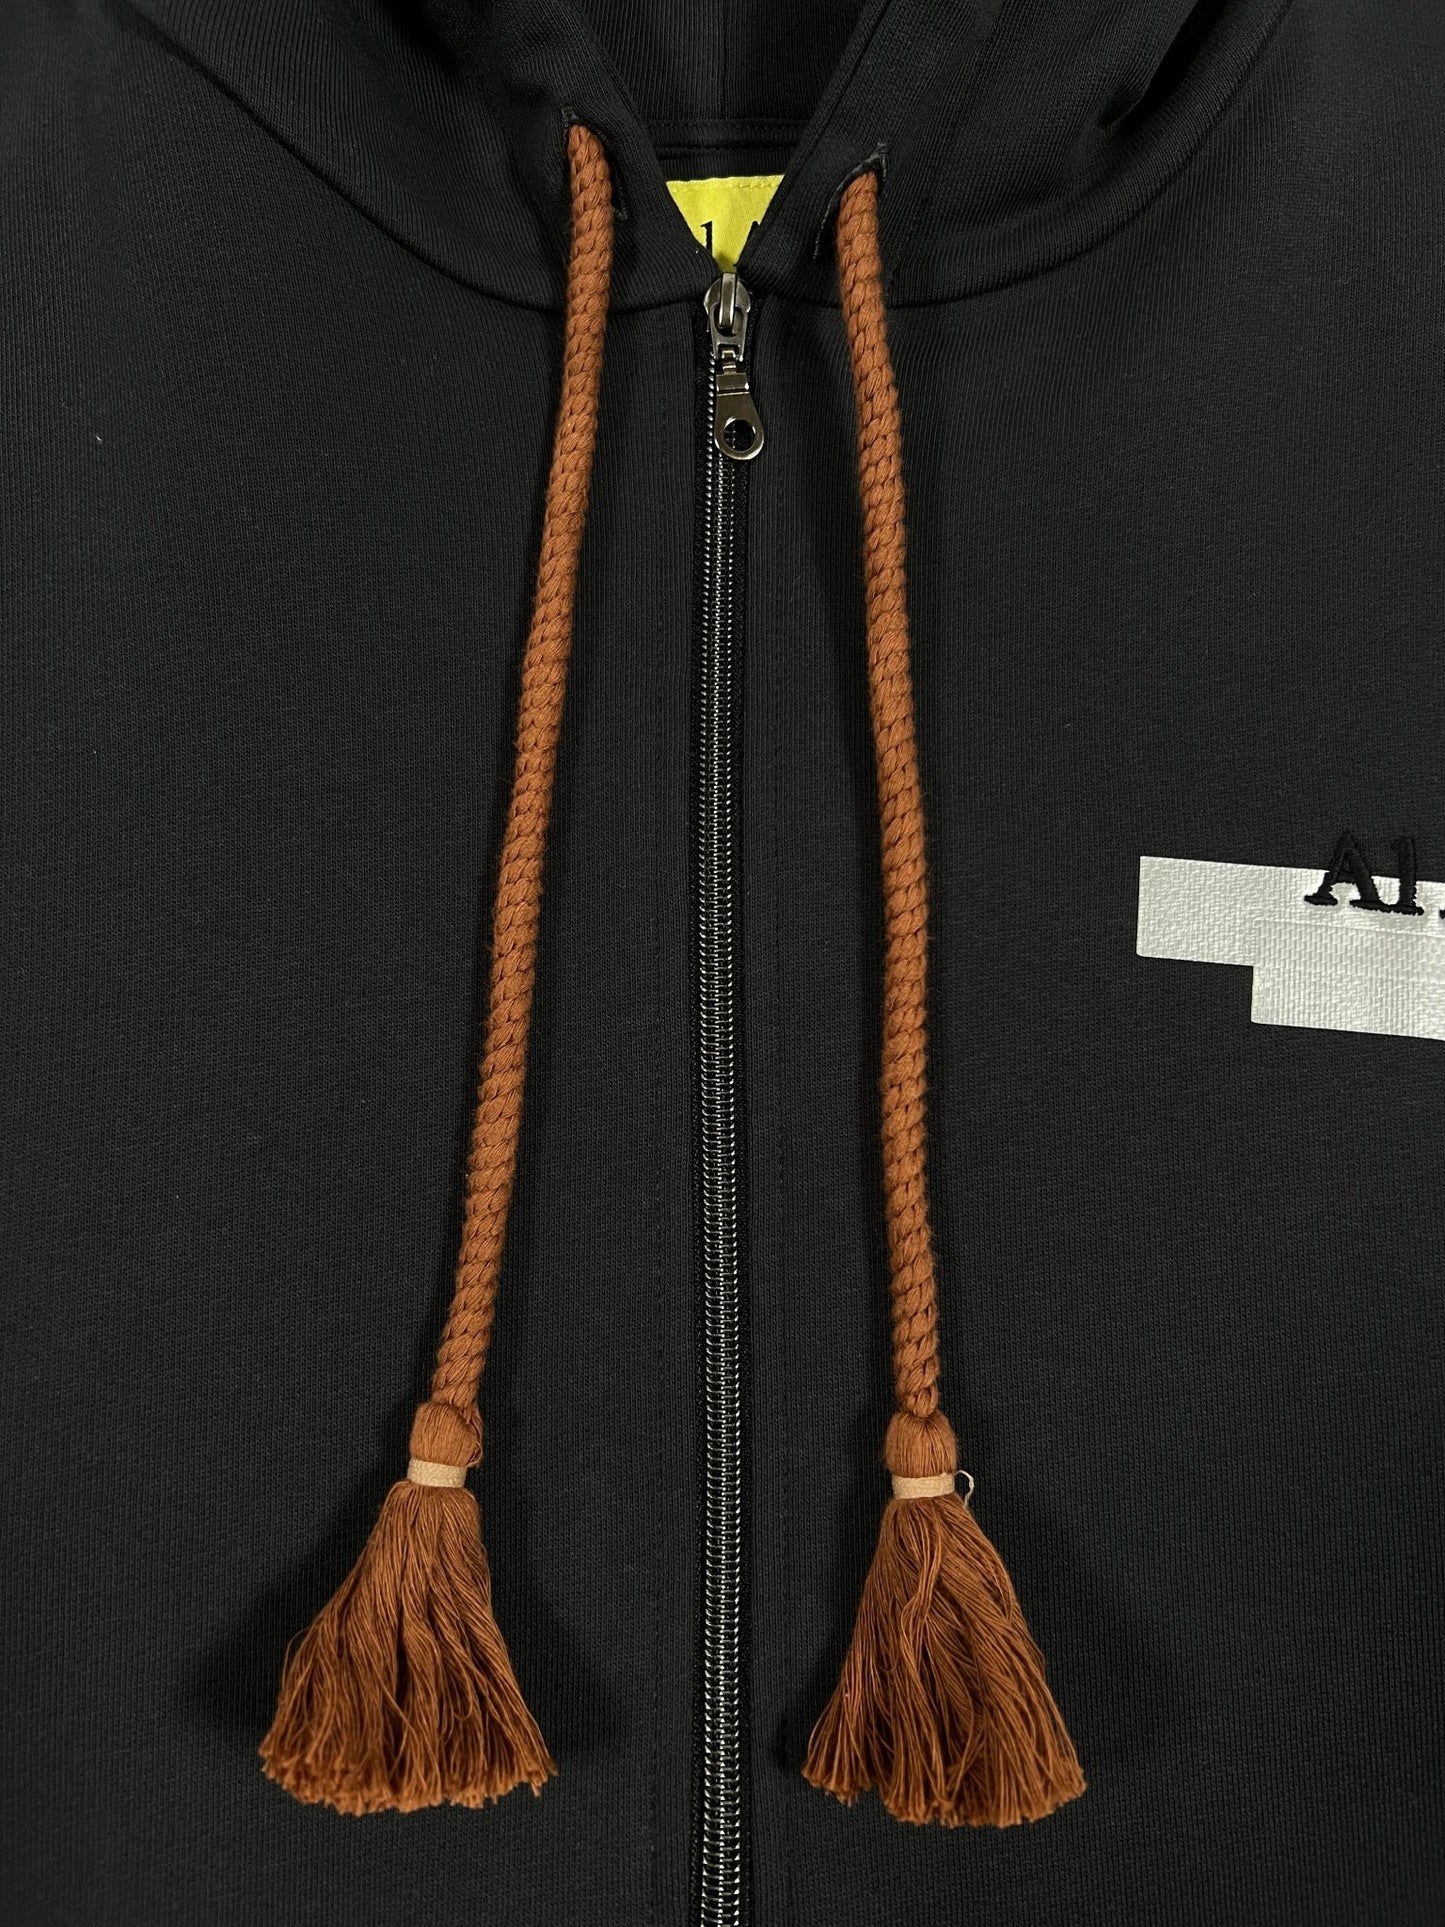 Black AL AIN AHZX S103 SECRET NOIR hoodie with a central zipper and braided drawstrings ending in tassels.